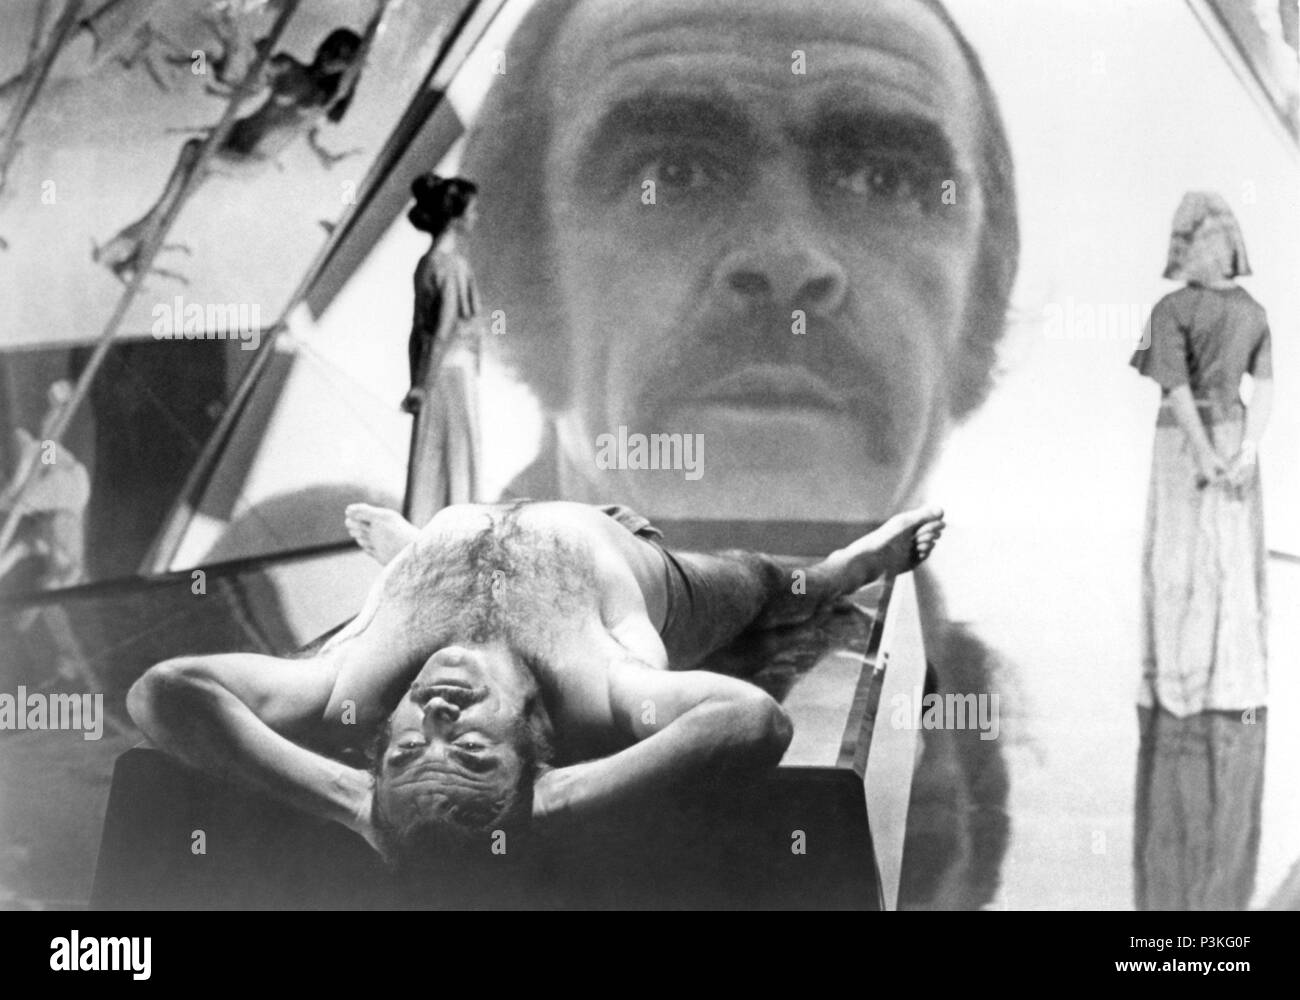 Original Film Title: ZARDOZ.  English Title: ZARDOZ.  Film Director: JOHN BOORMAN.  Year: 1974.  Stars: SEAN CONNERY. Credit: 20TH CENTURY FOX / Album Stock Photo